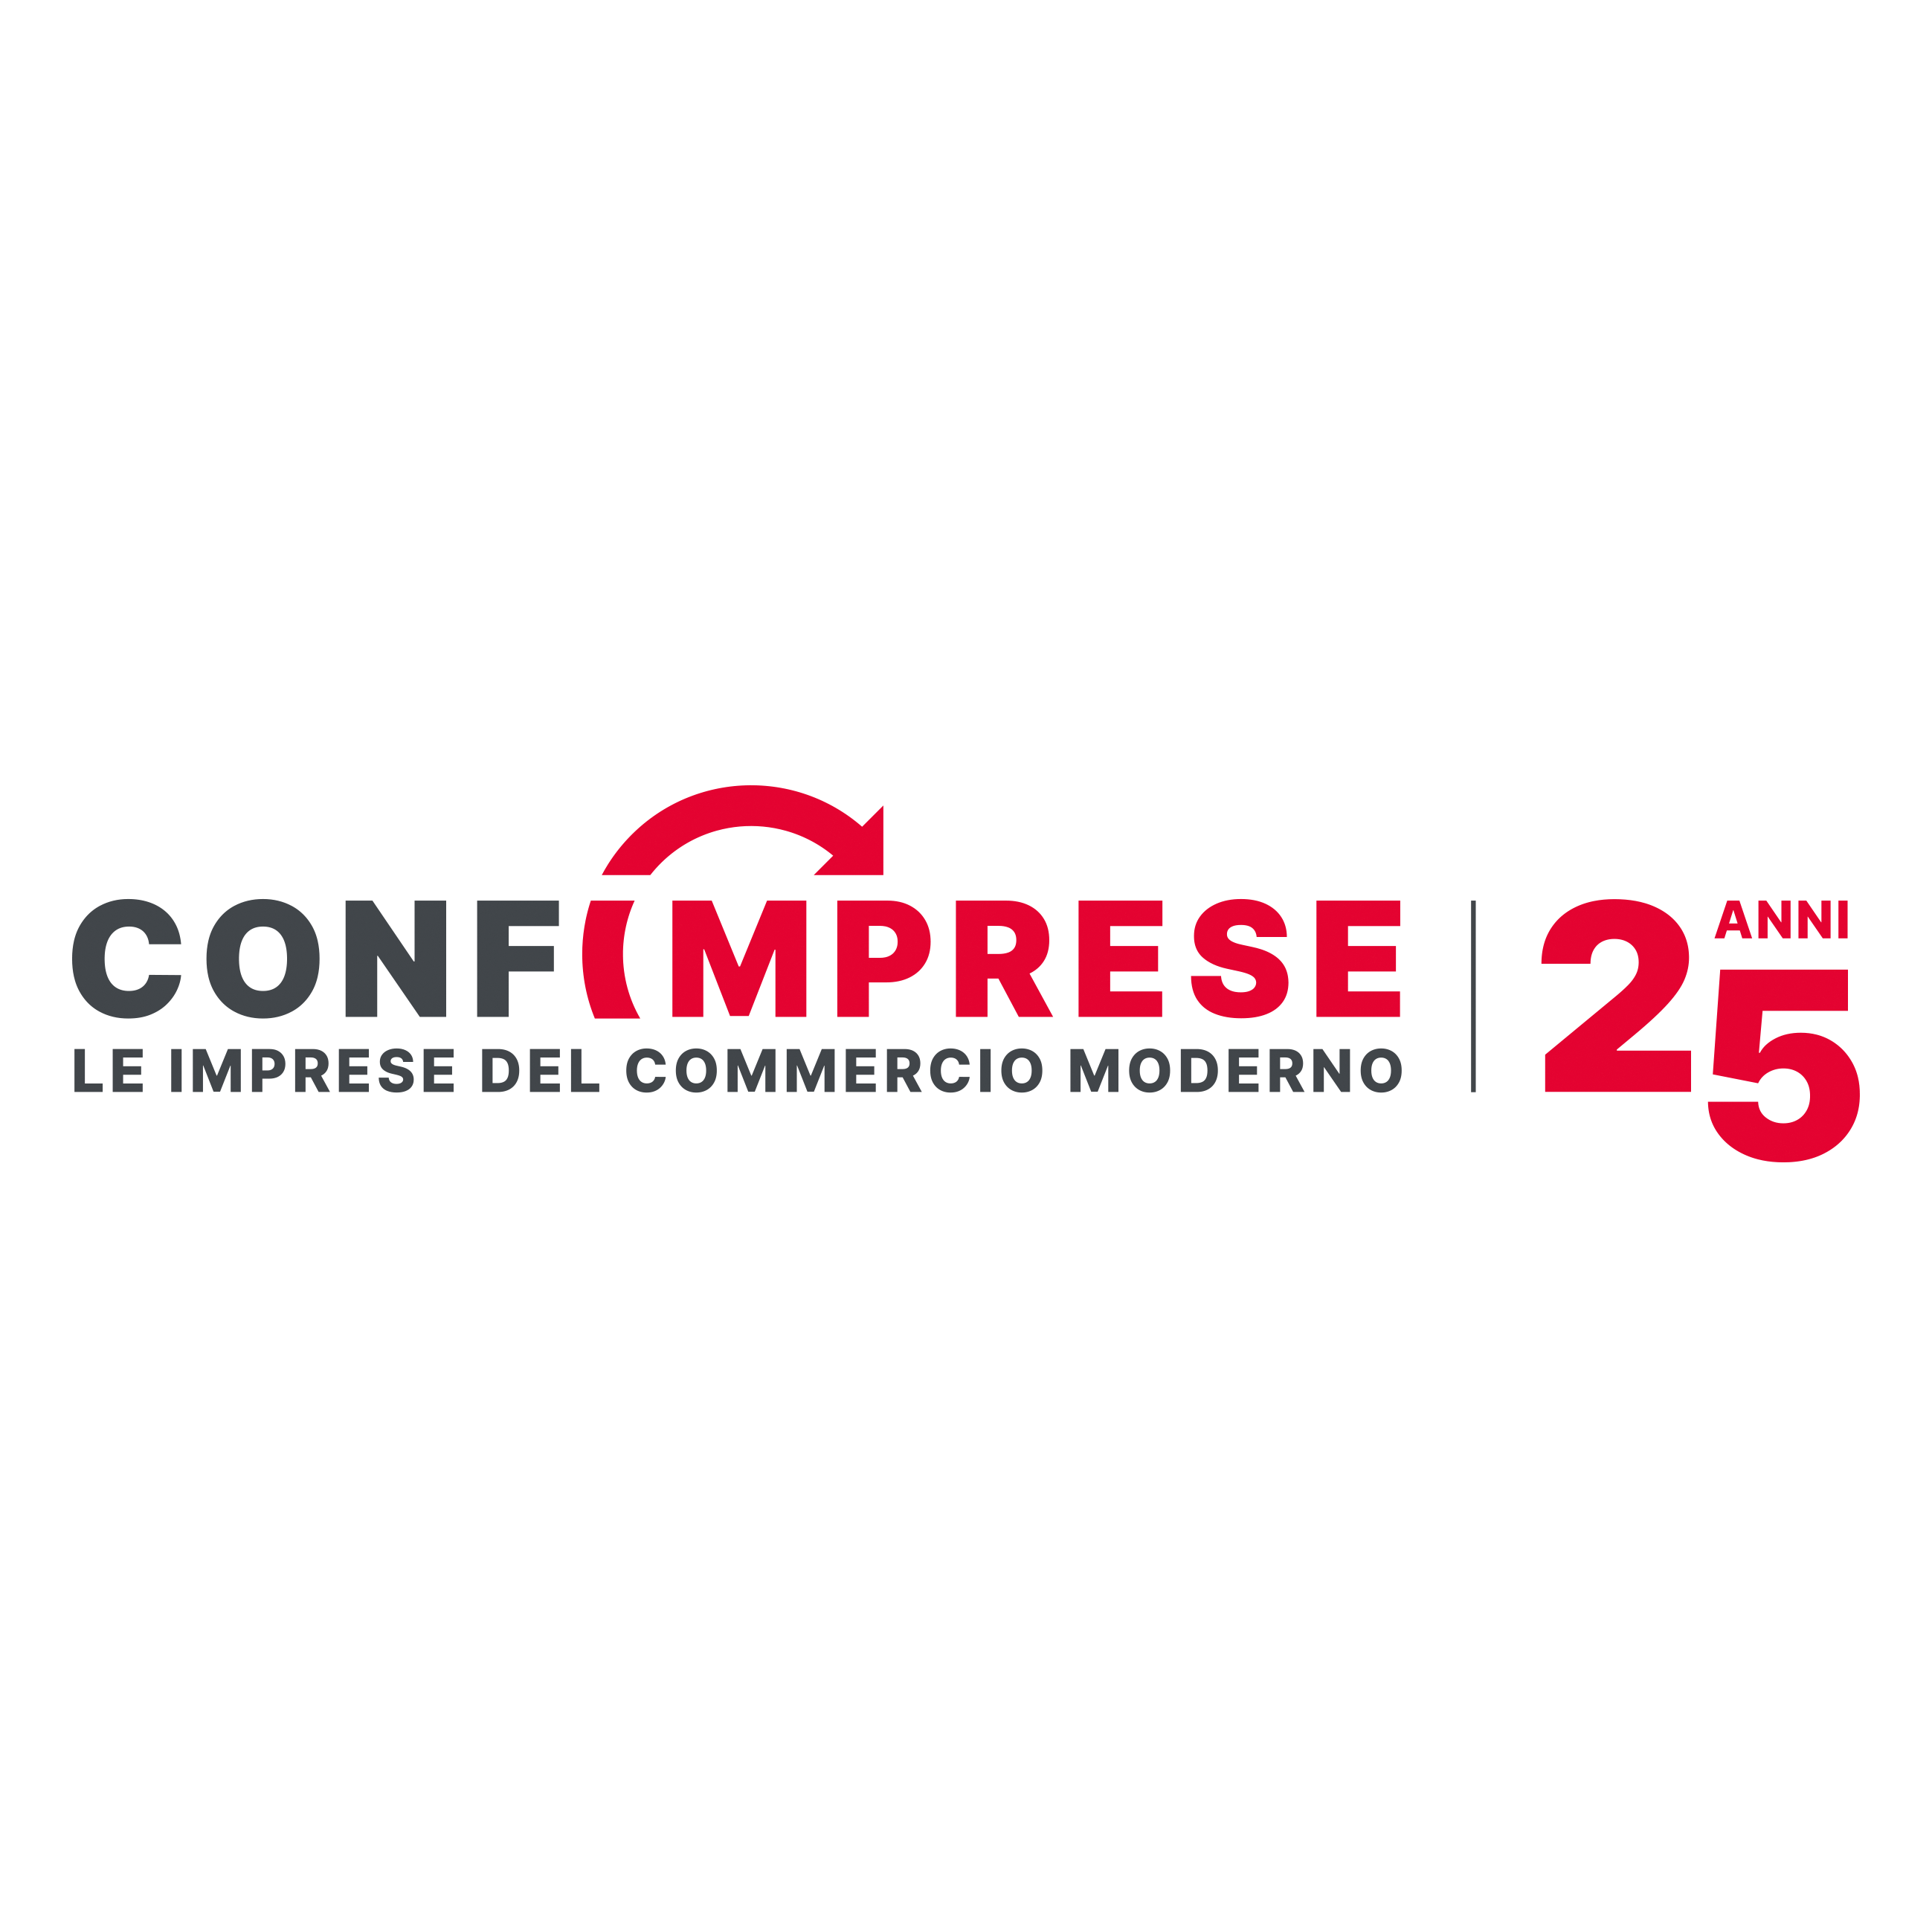 Confimprese 25 | Digital Innovation Days logo